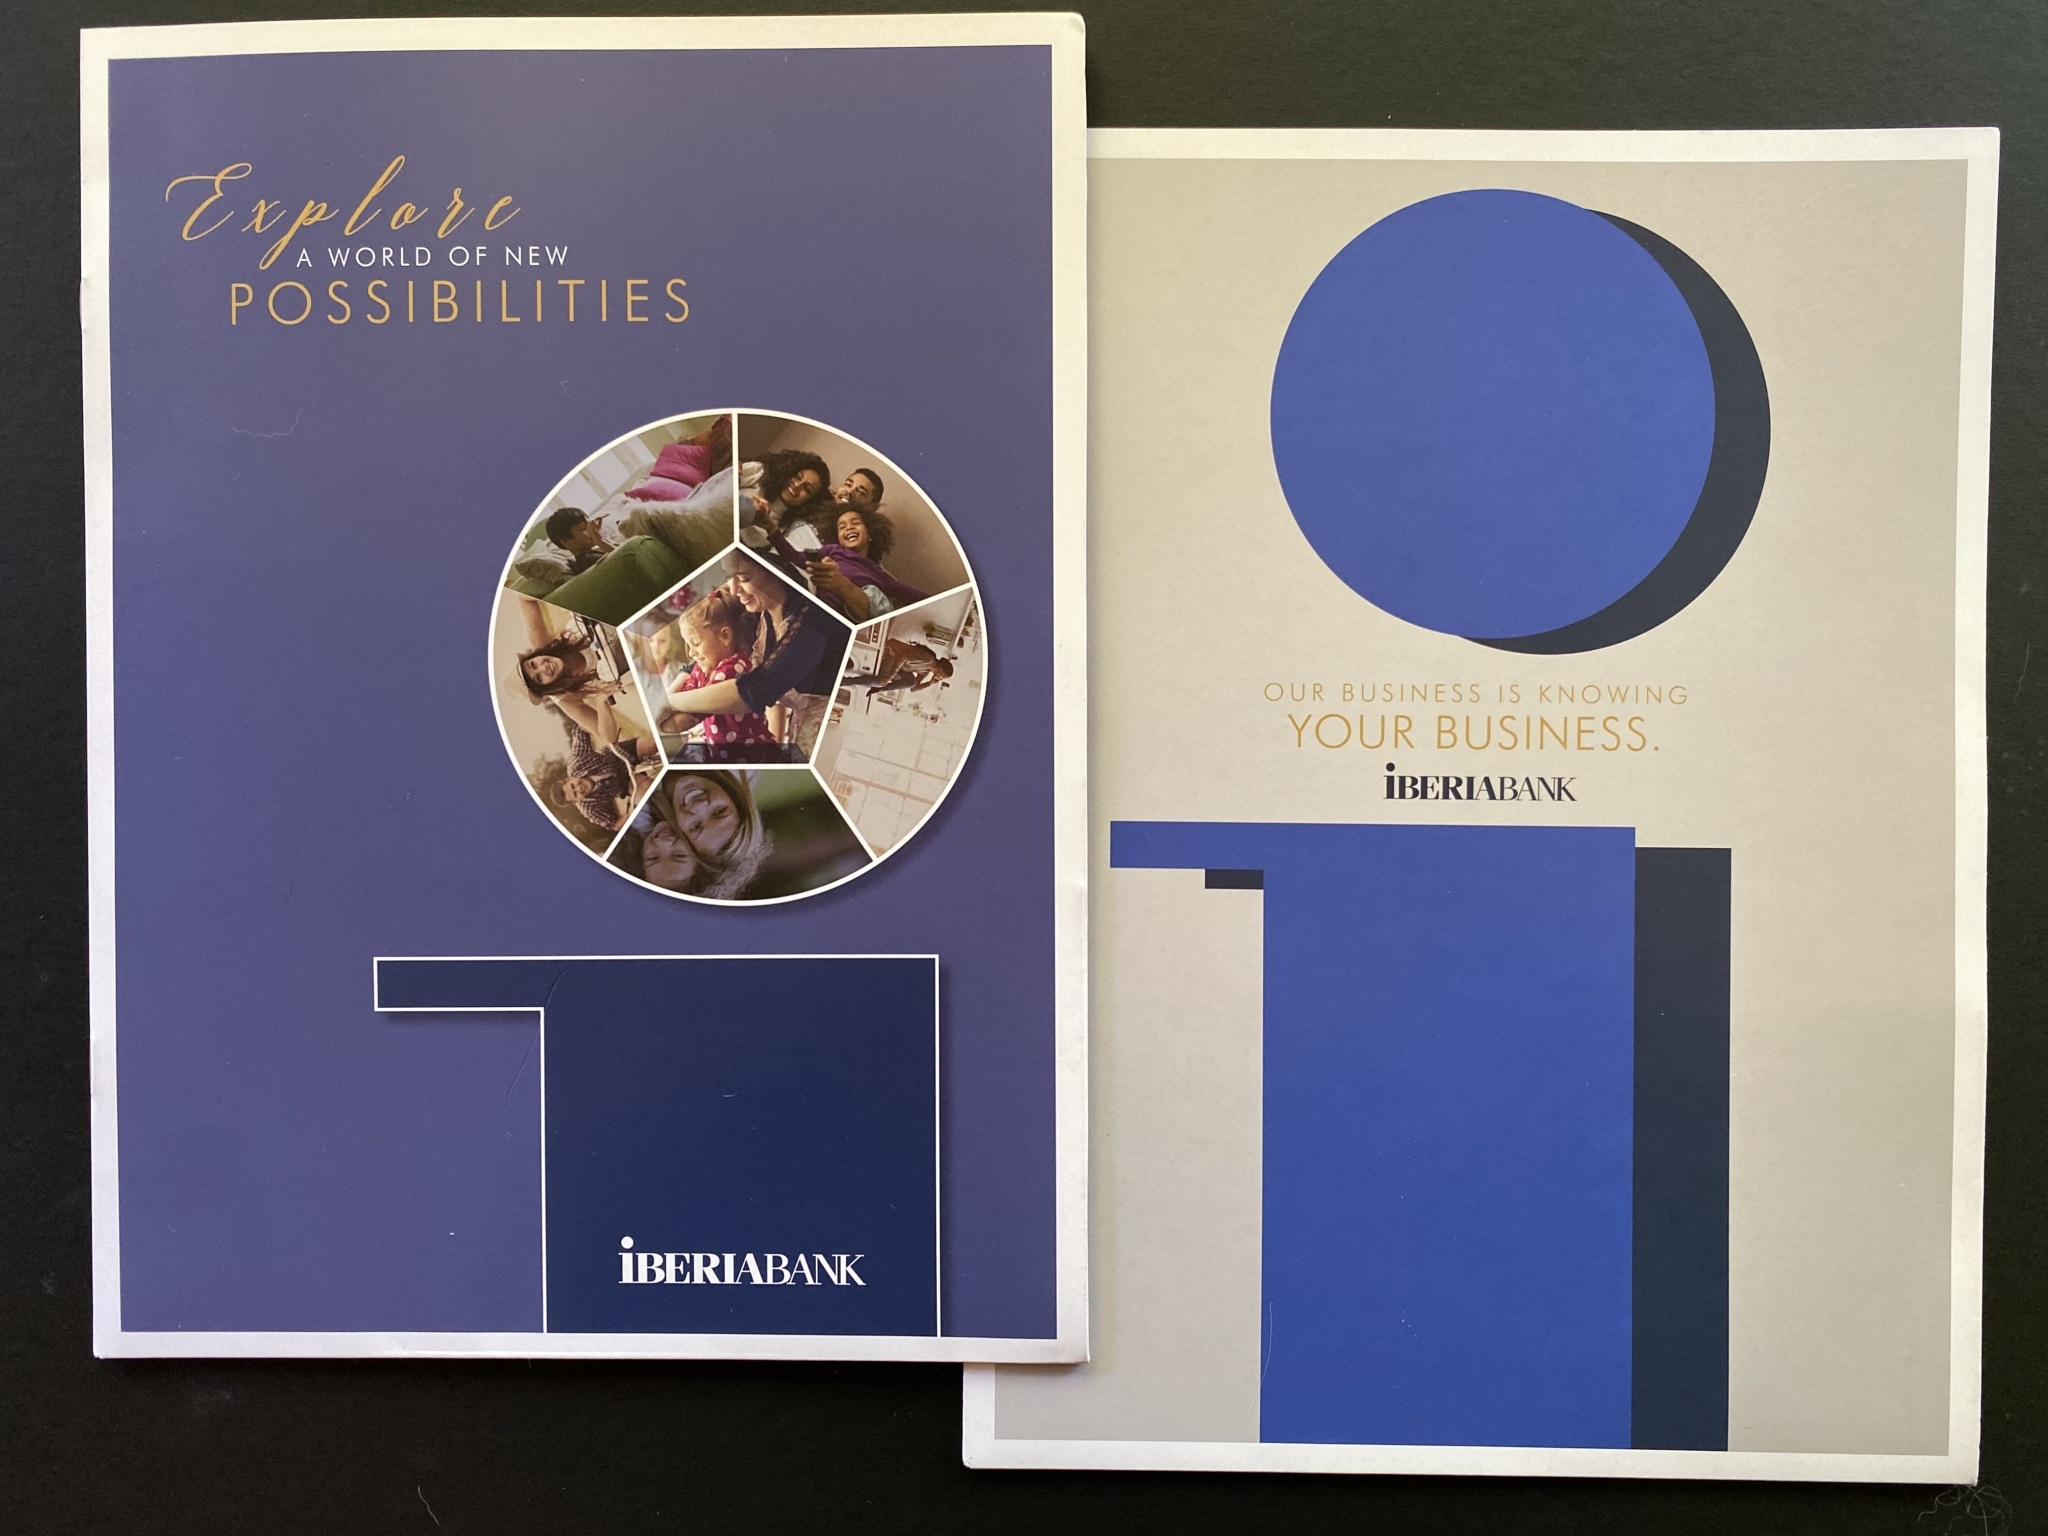 Image of IBERIABANK marketing materials.